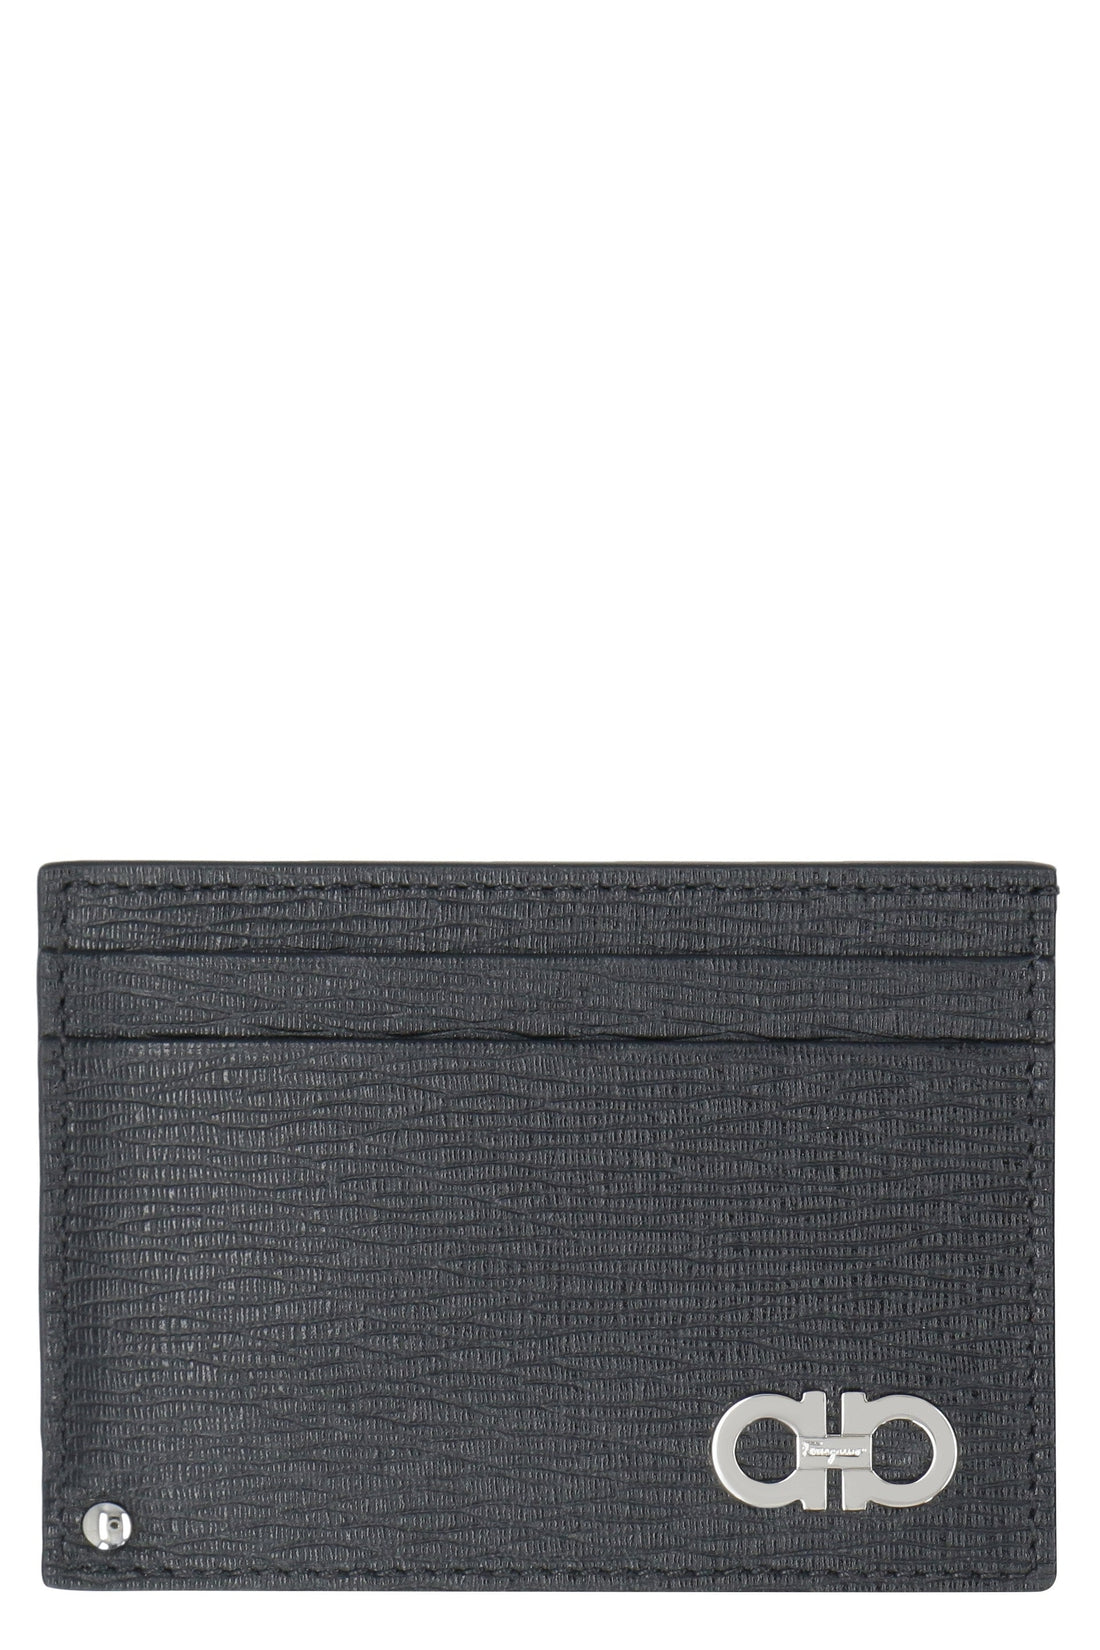 FERRAGAMO-OUTLET-SALE-Gancini leather card holder-ARCHIVIST